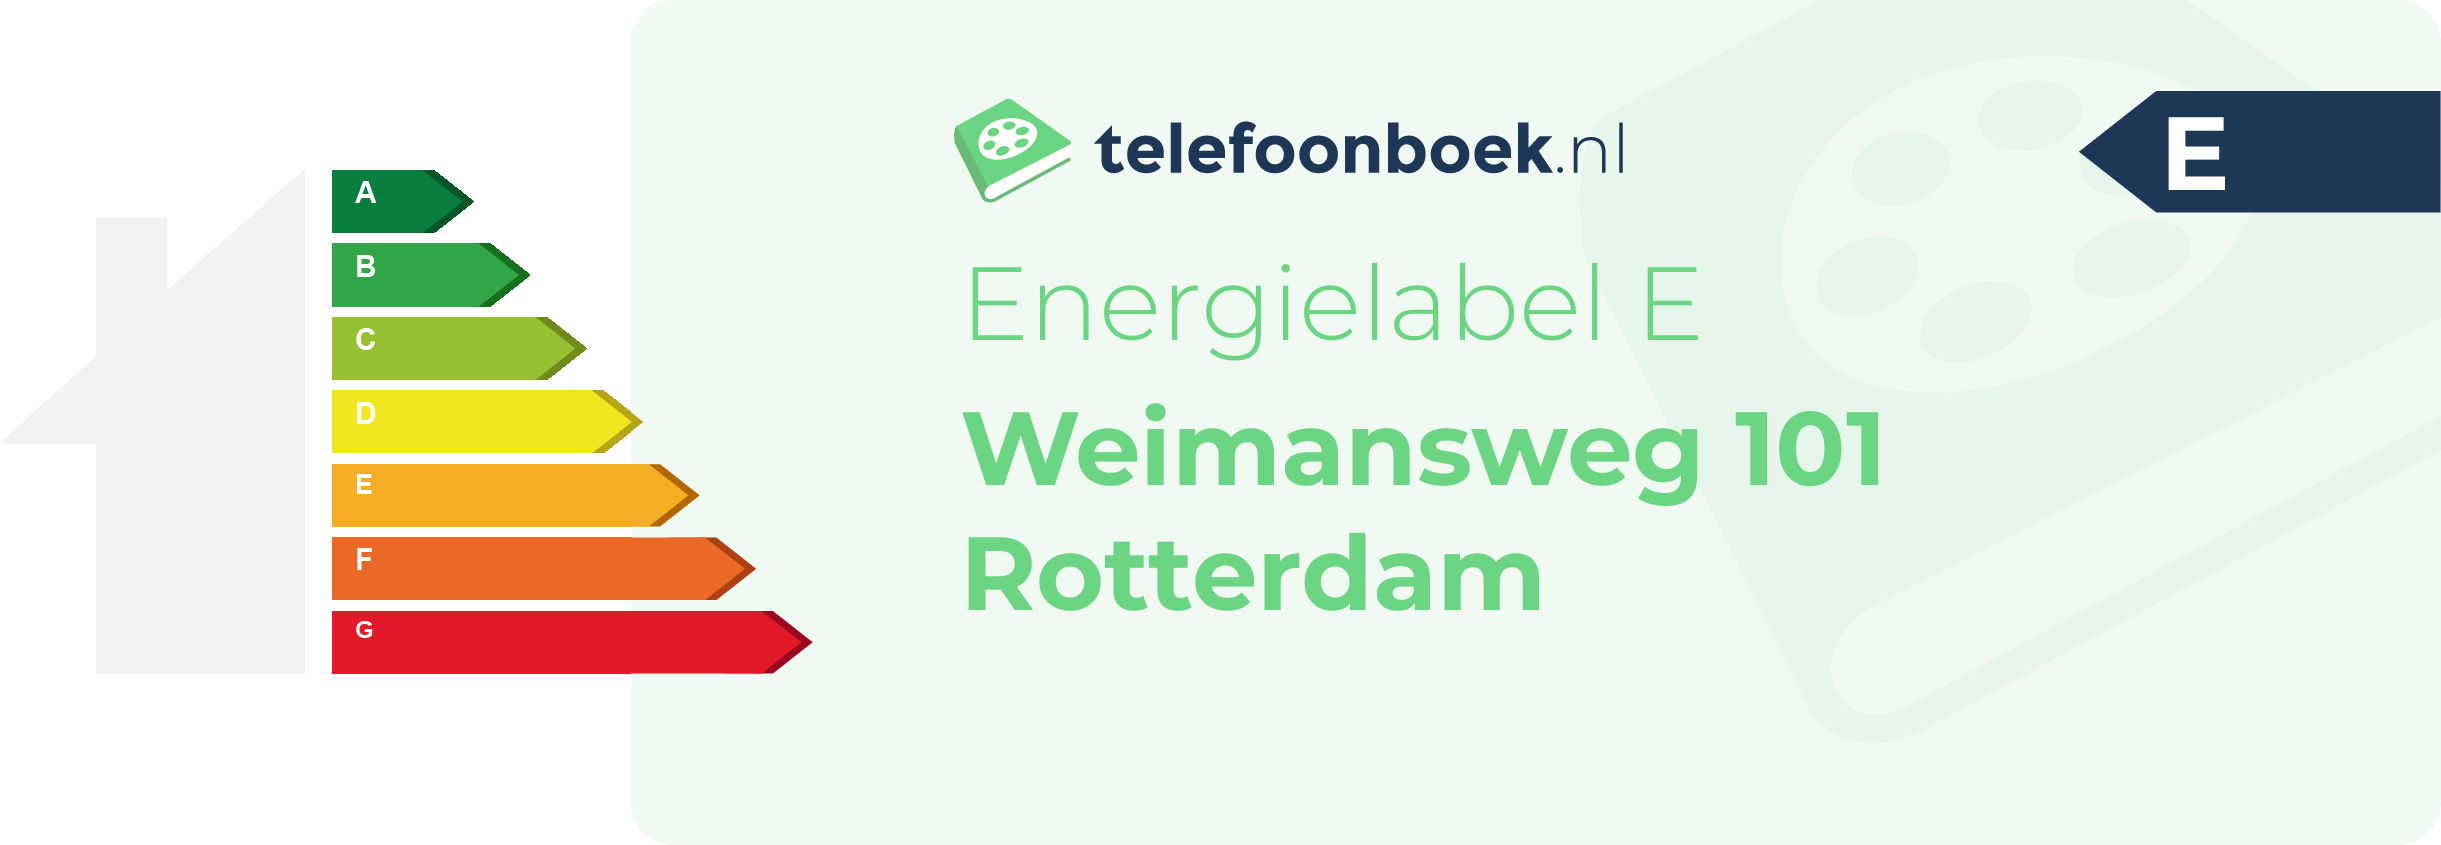 Energielabel Weimansweg 101 Rotterdam